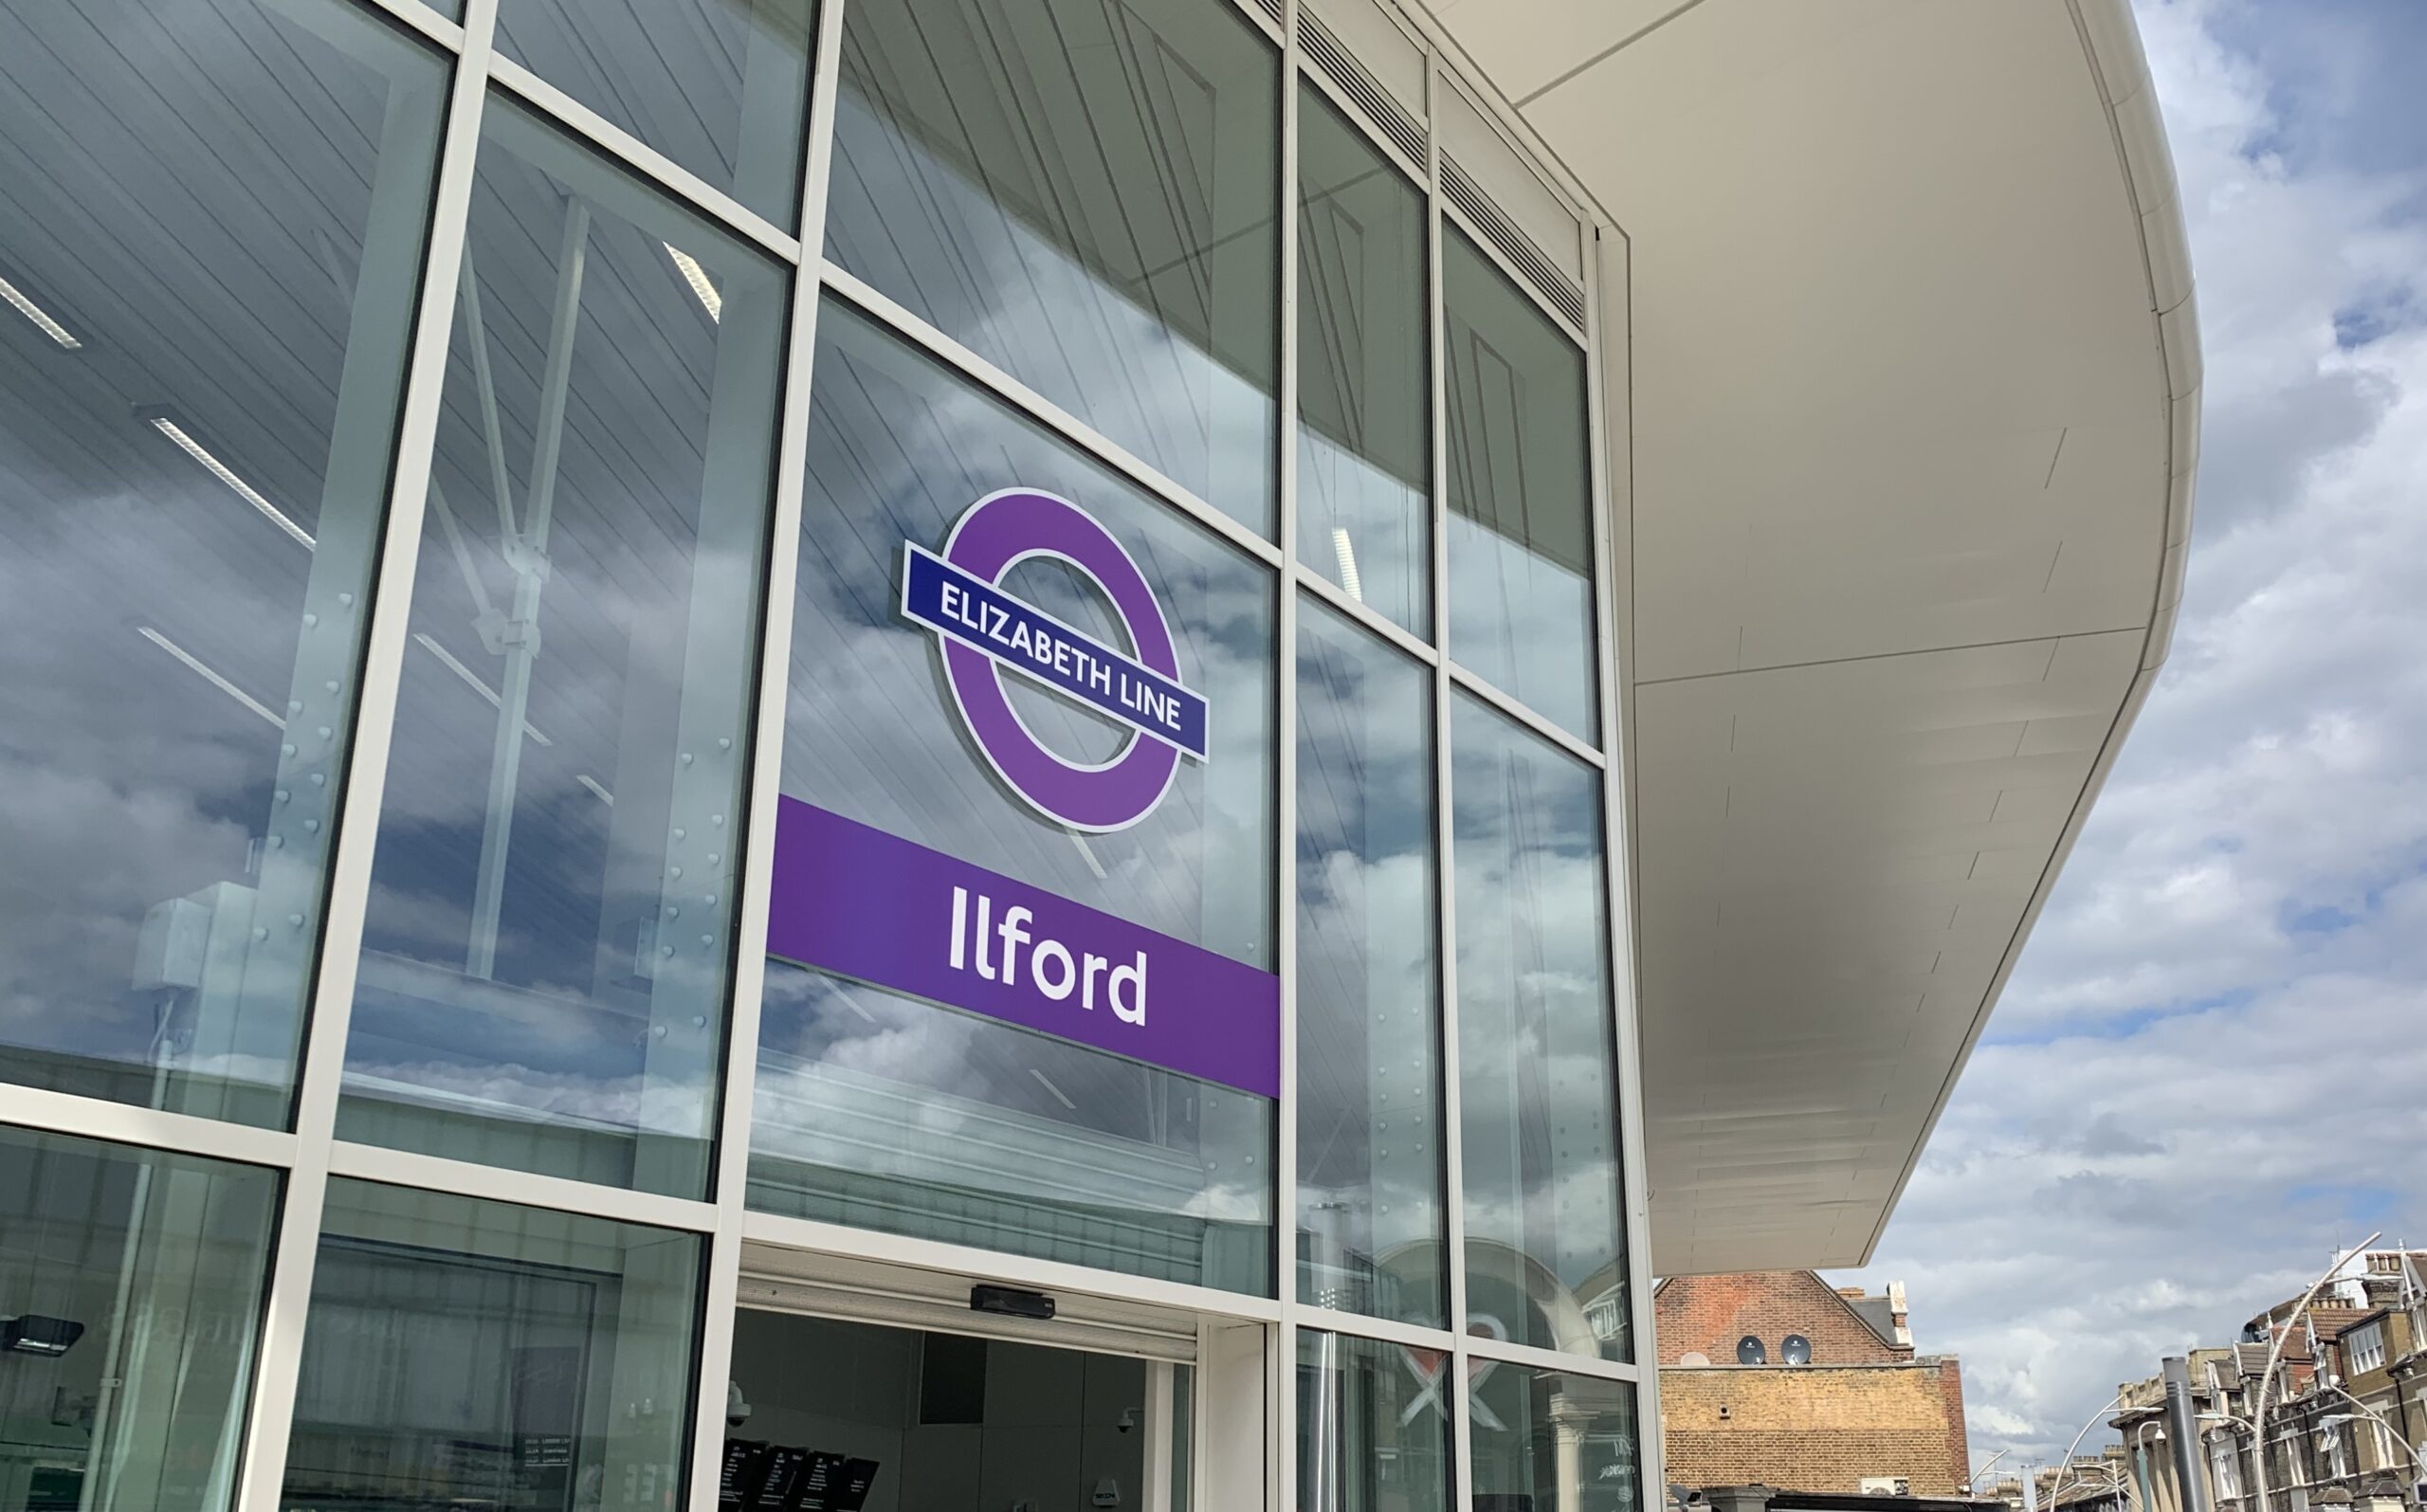 Ilford Station